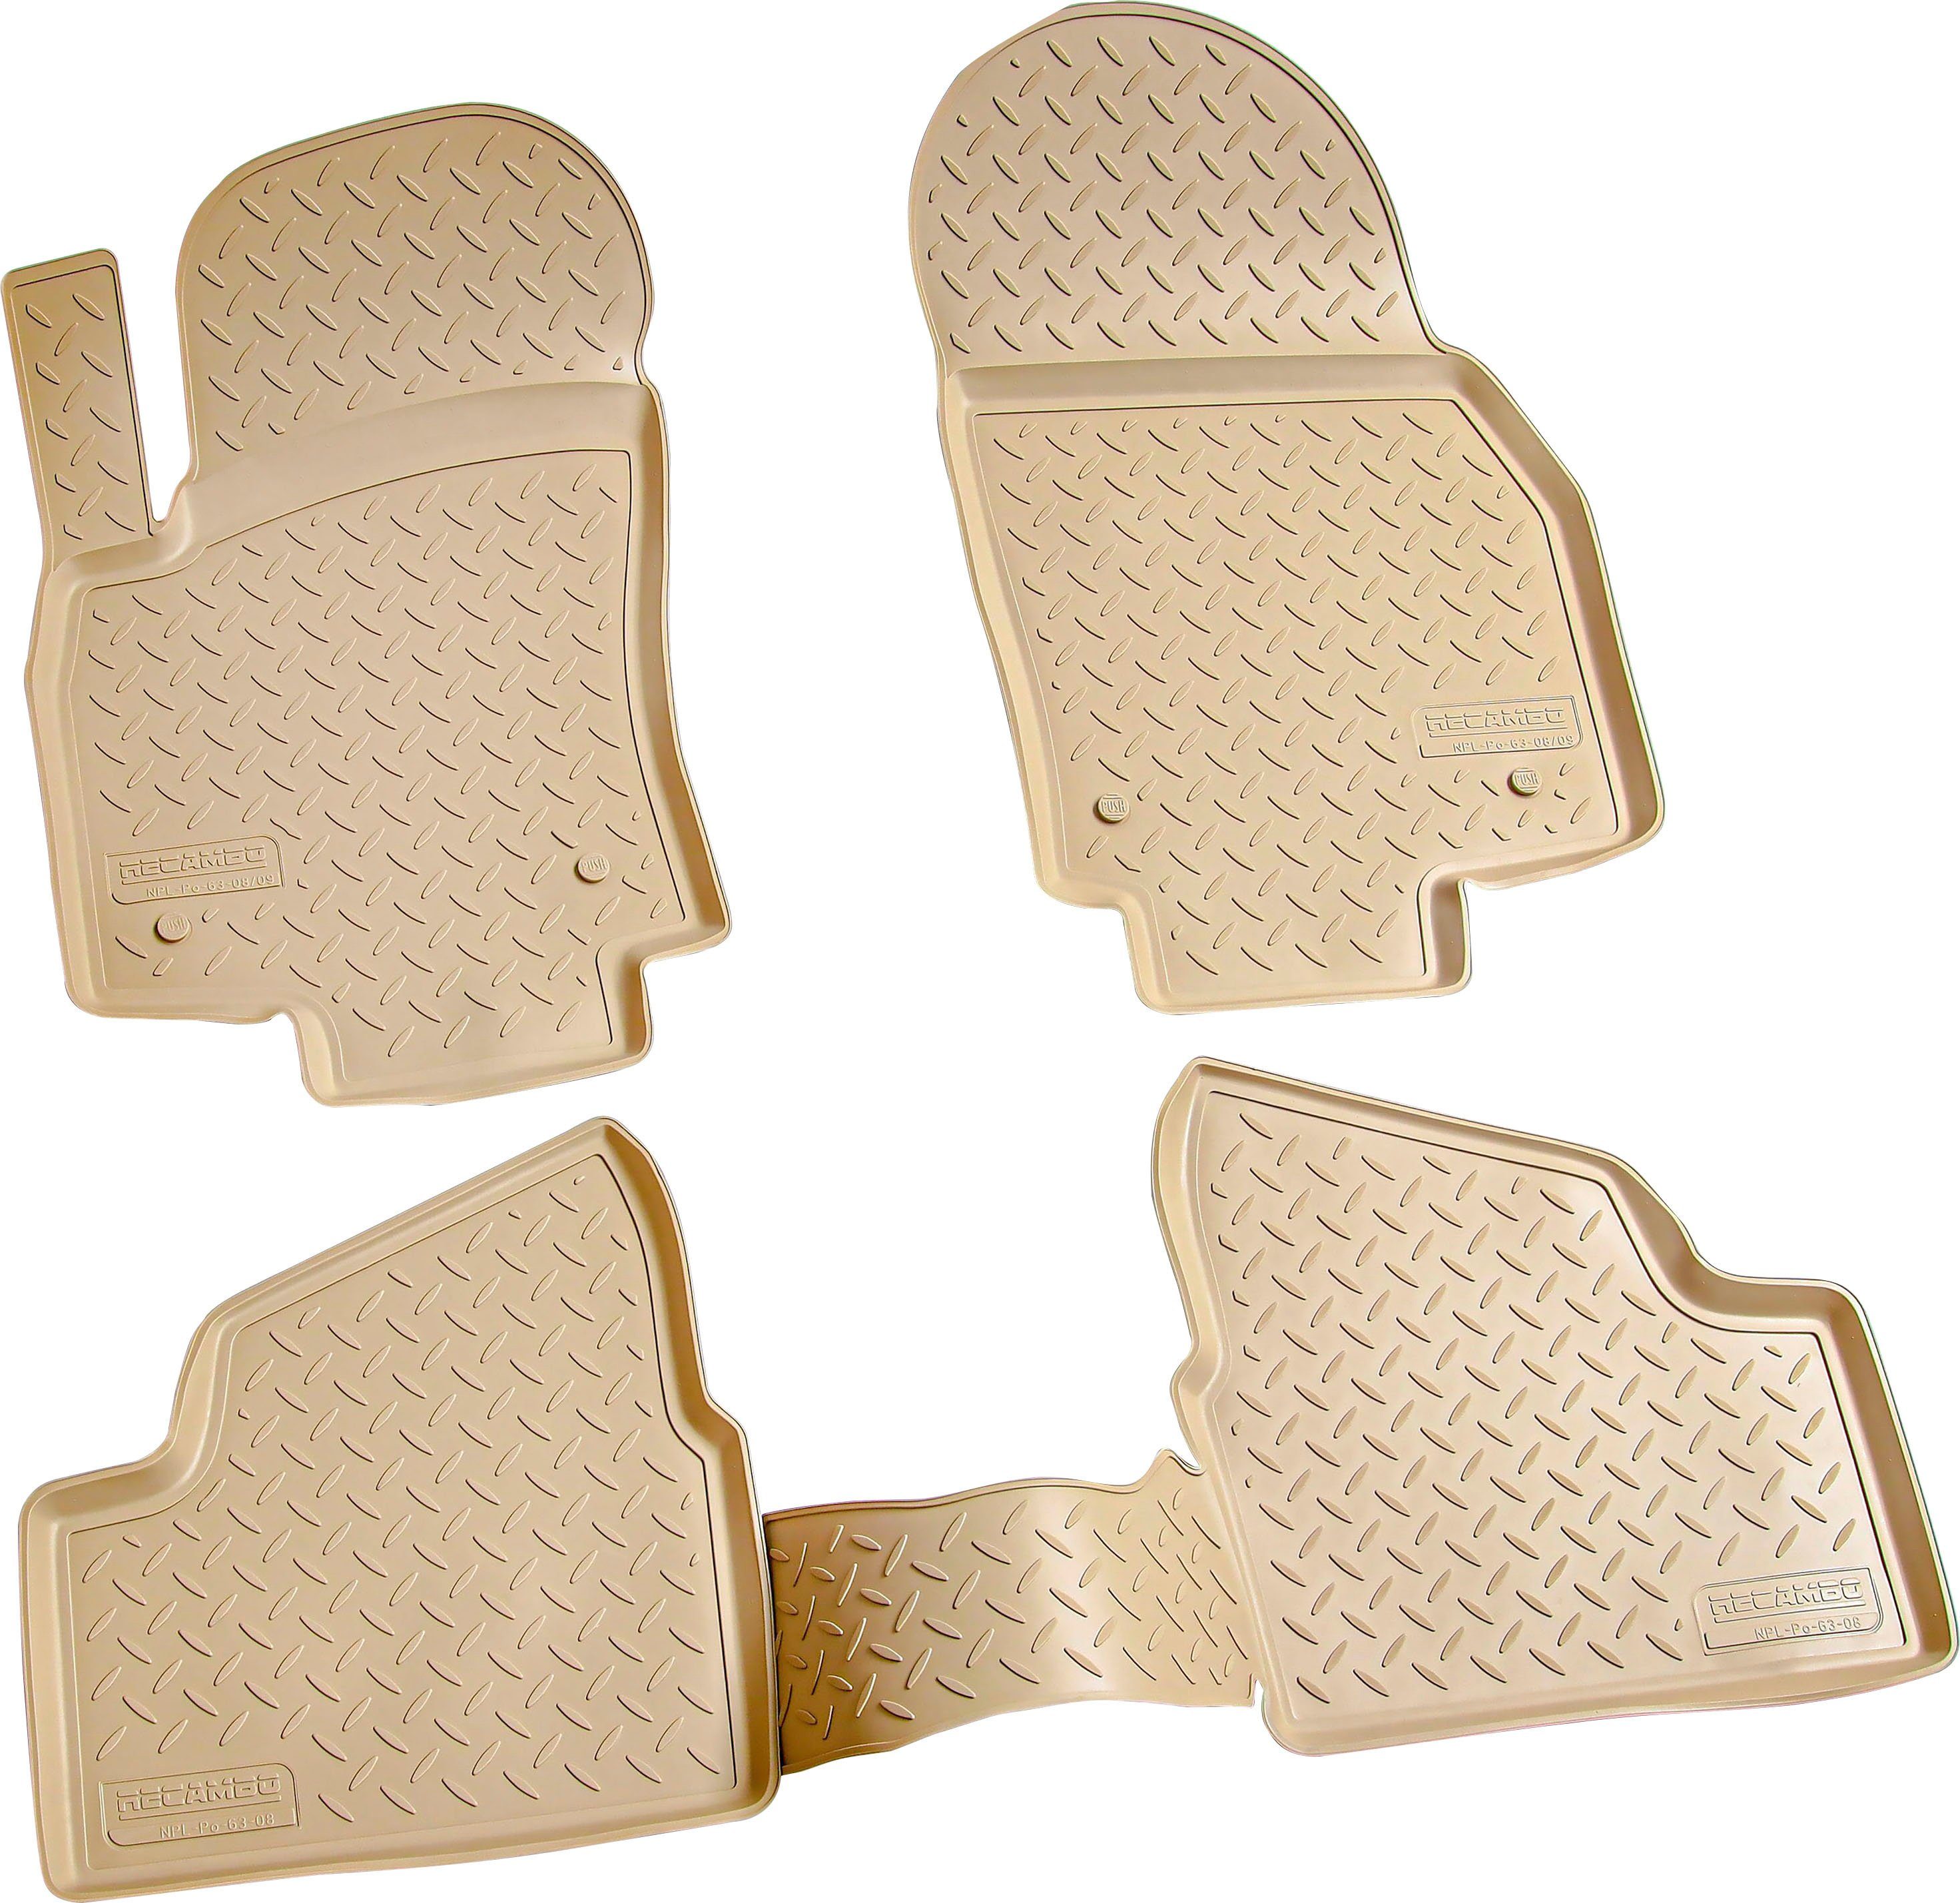 RECAMBO Passform-Fußmatten CustomComforts (4 OPEL Astra, perfekte St), Passform - 2004 H 2014, für